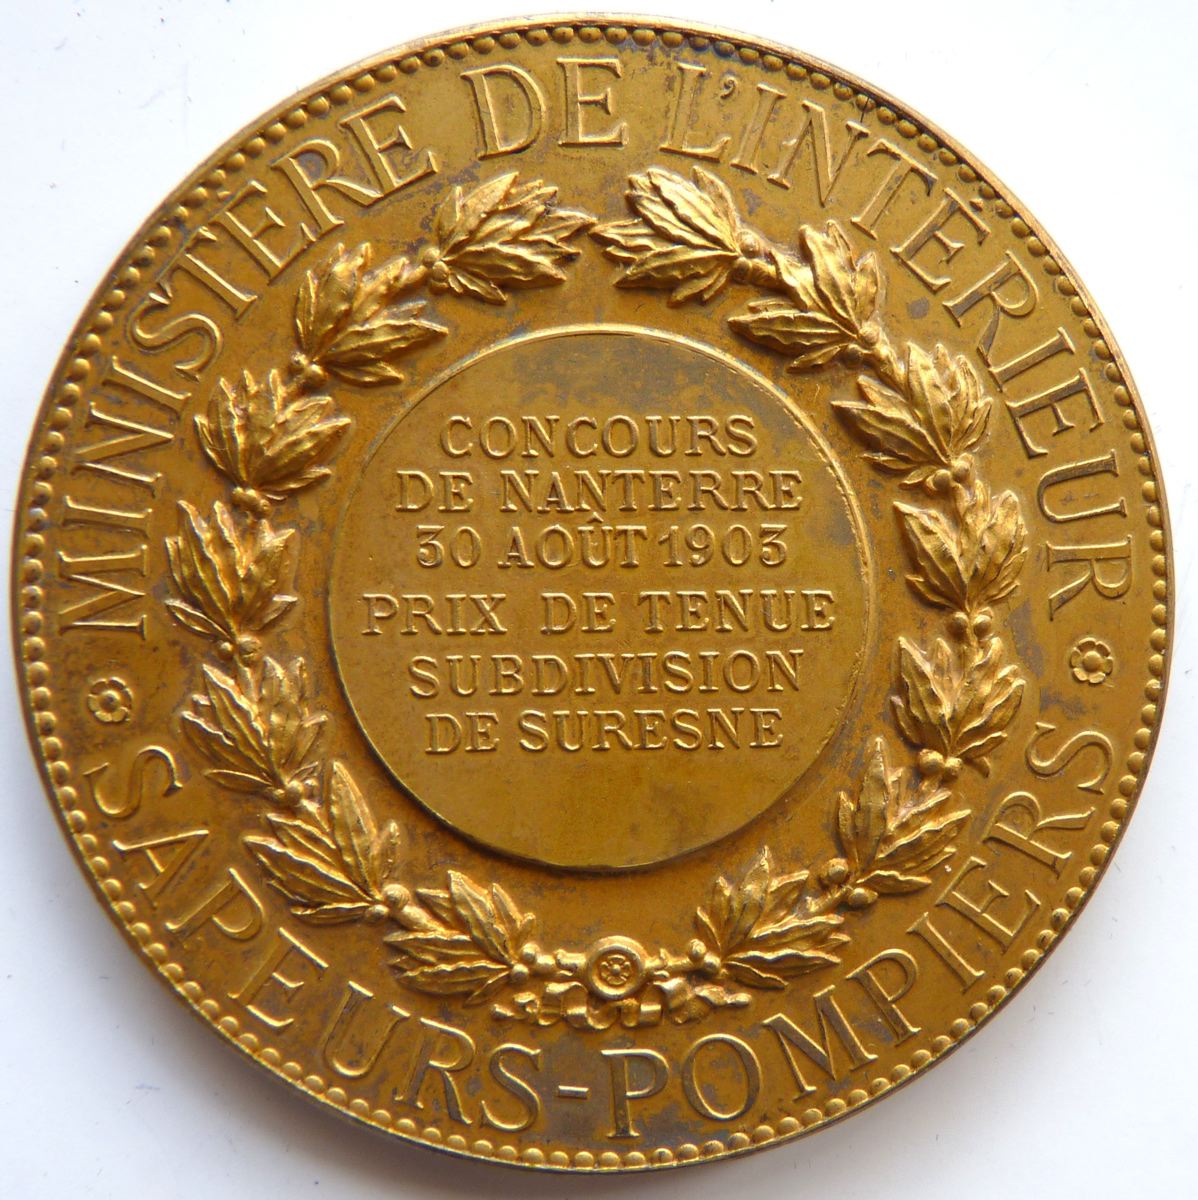 Concours de Nanterre - 30 Août 1903-Prix de tenue-Subdivision de Suresne